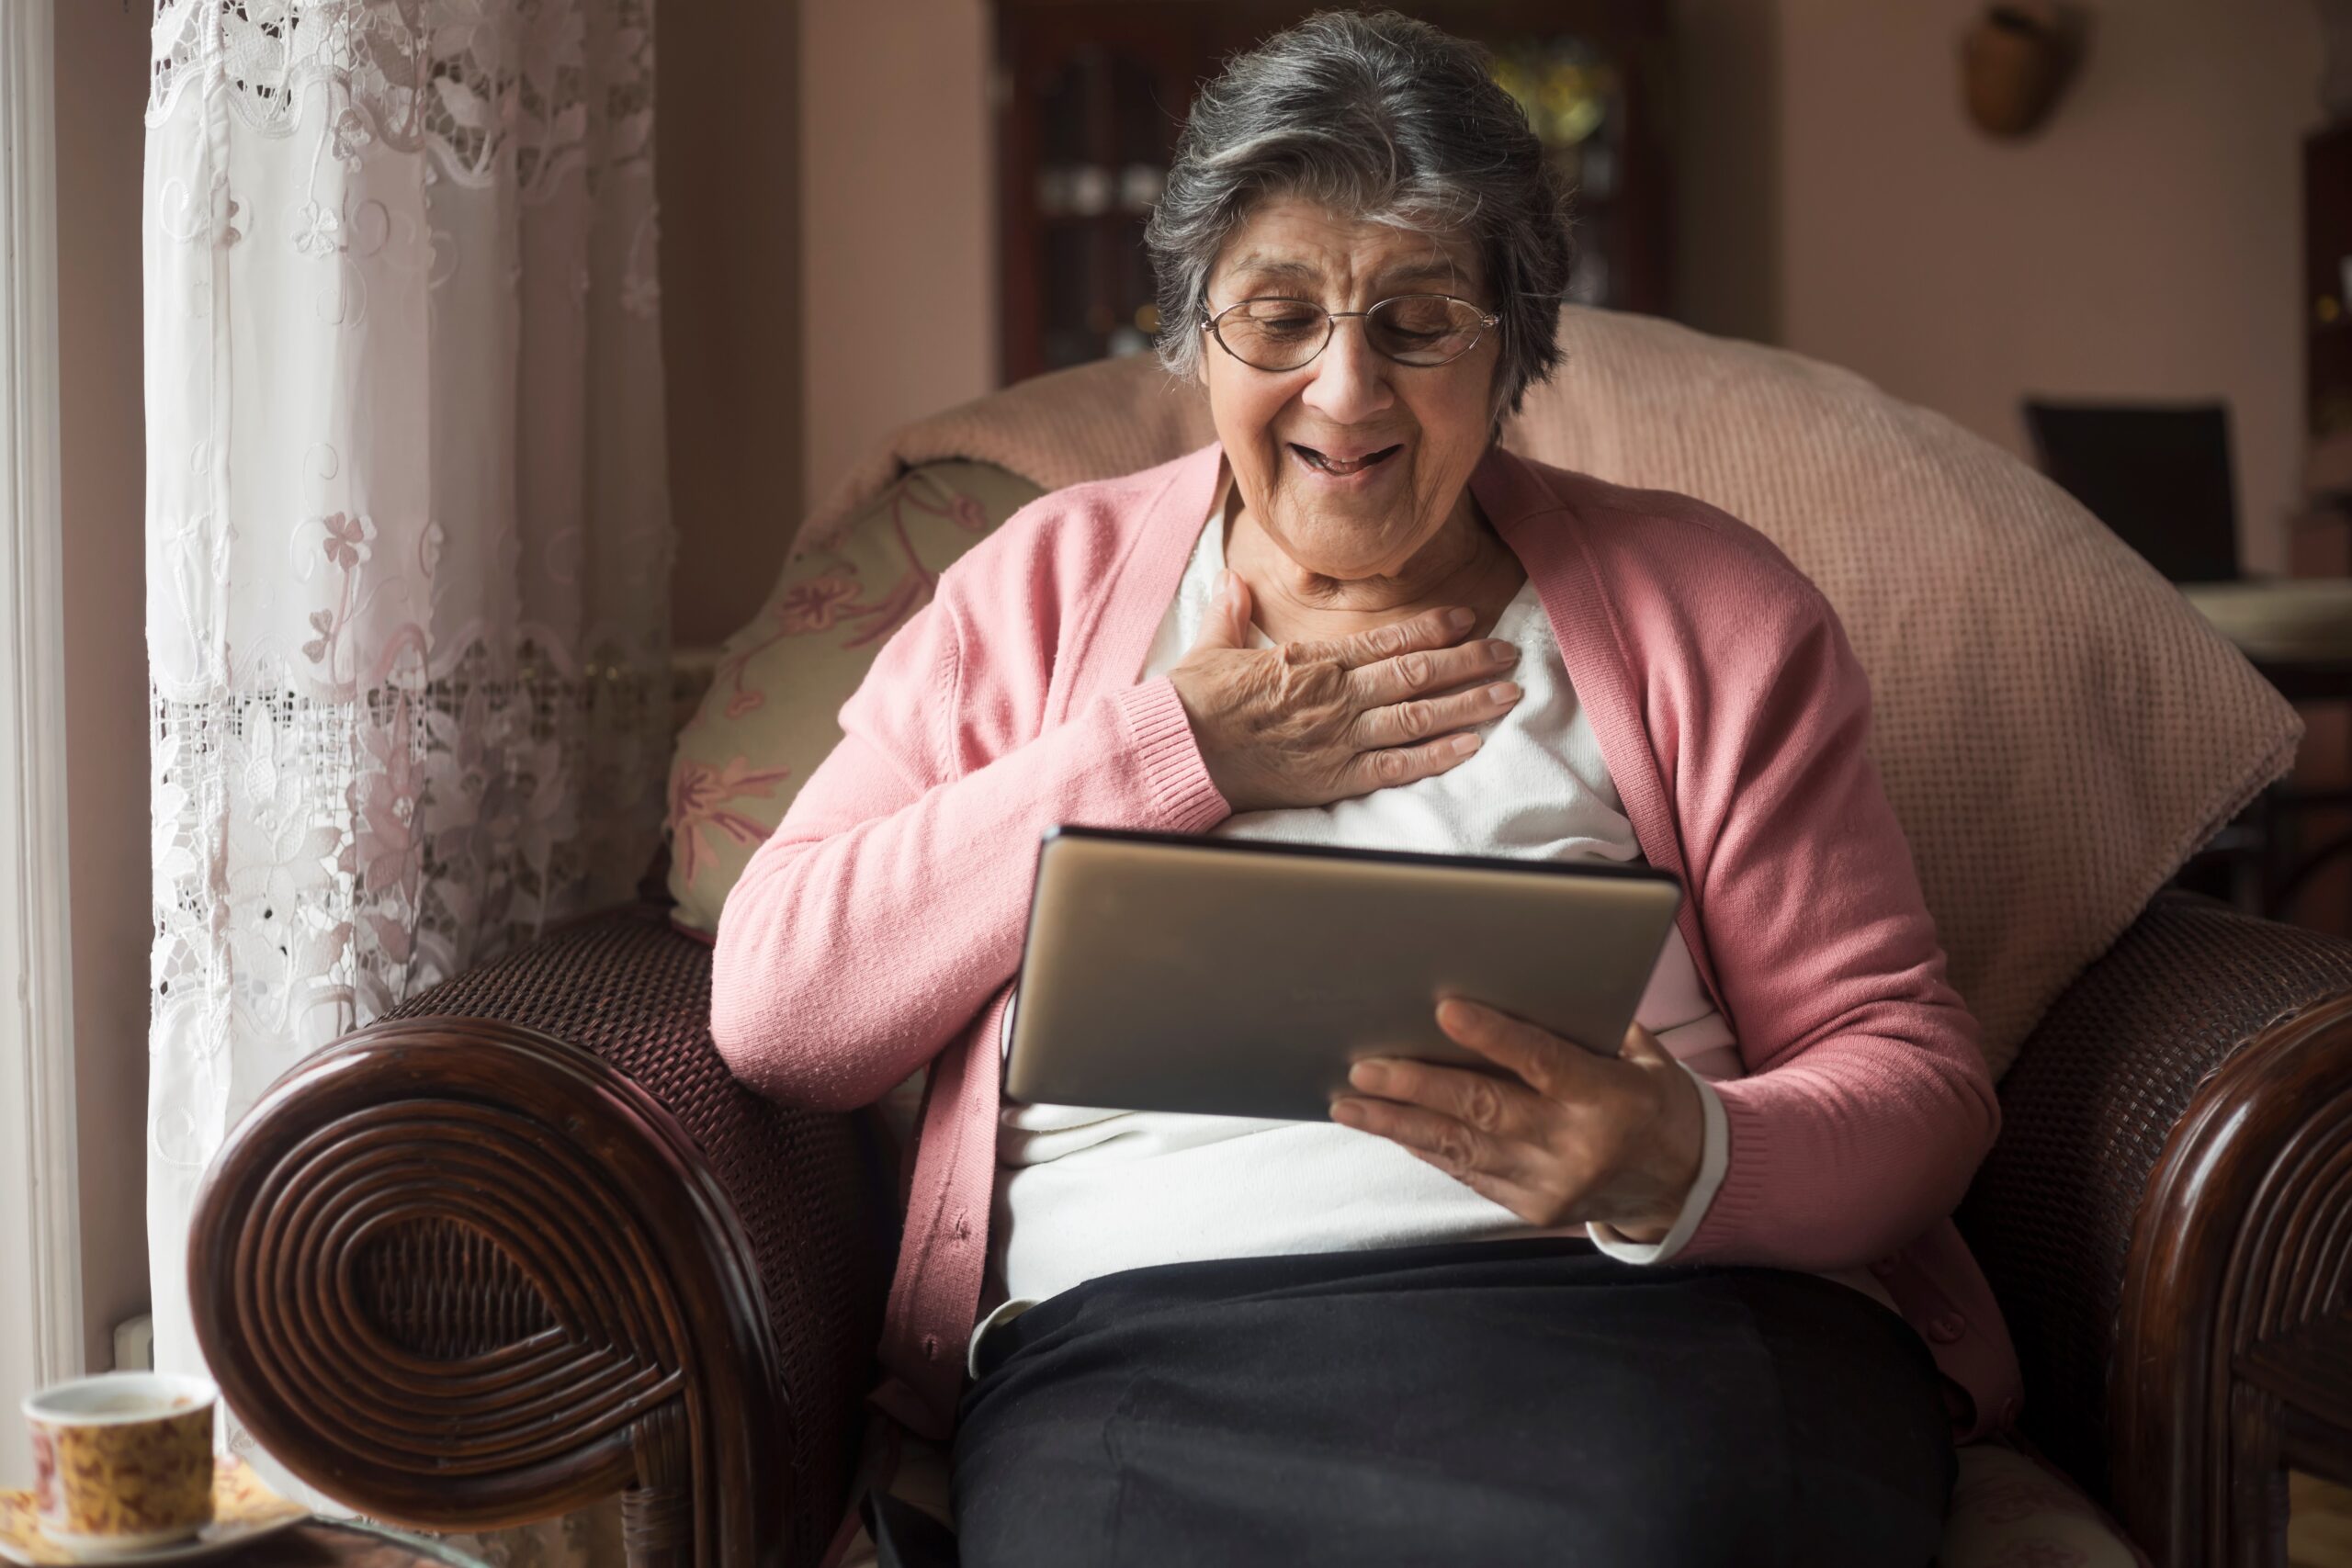 Senior woman enjoying at home and using modern technology